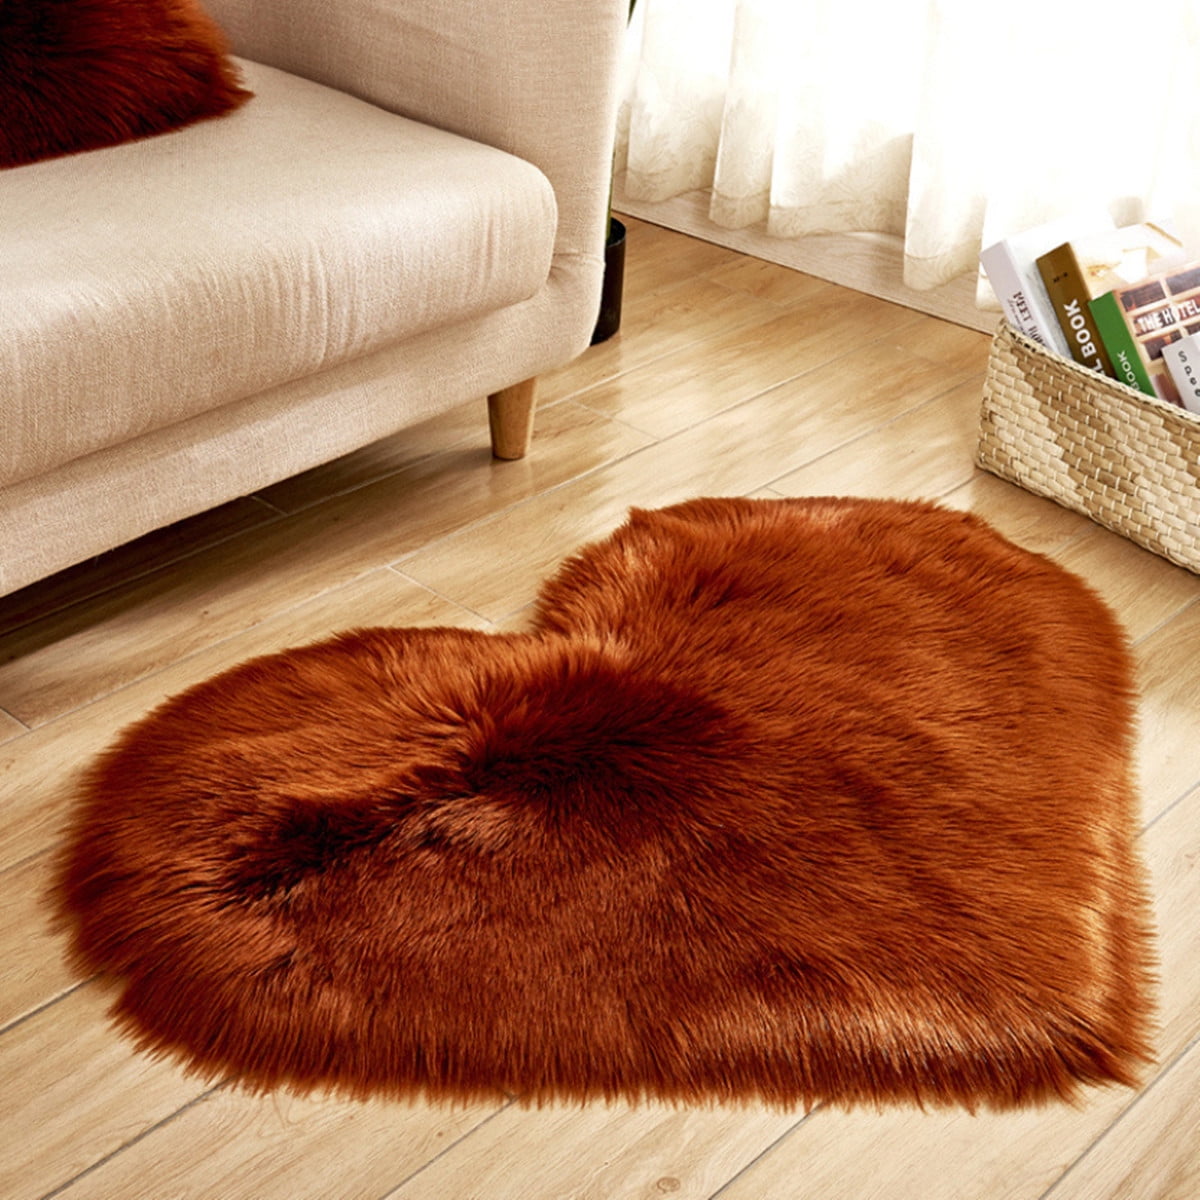 Heart Shaped Fluffy Rugs Shaggy Area Rug Soft Fur Bedroom Home Floor Carpet Mat 